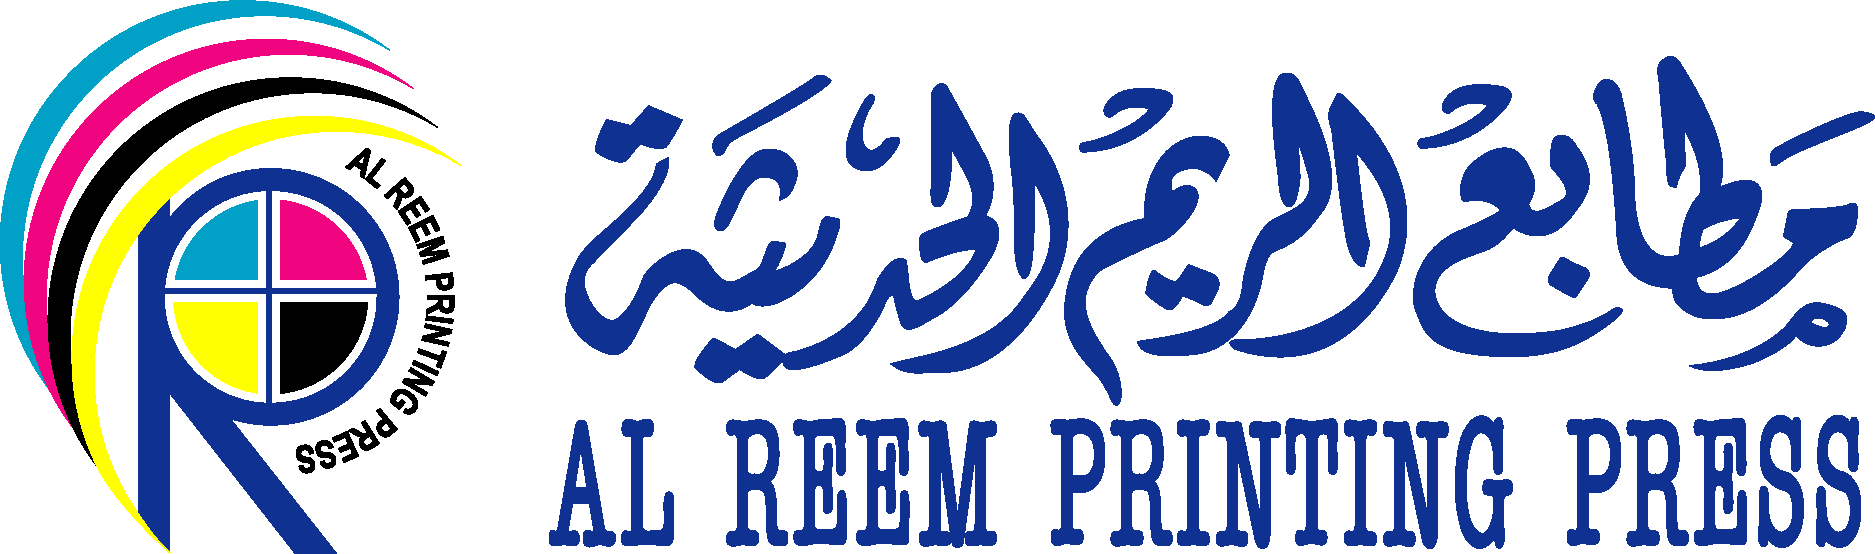 Printing Company Logo Design (1634256)